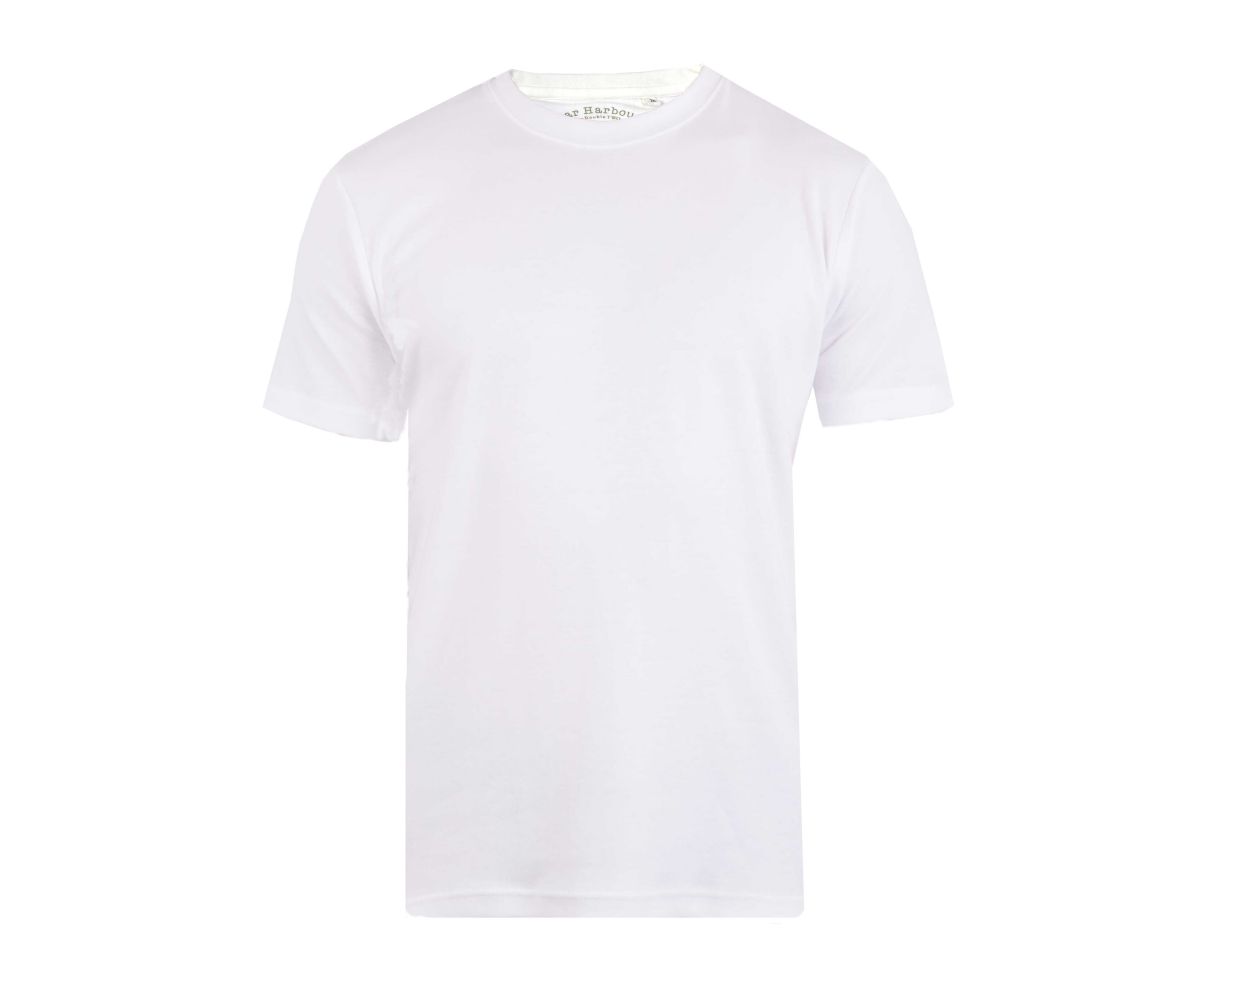 plain white t shirt image